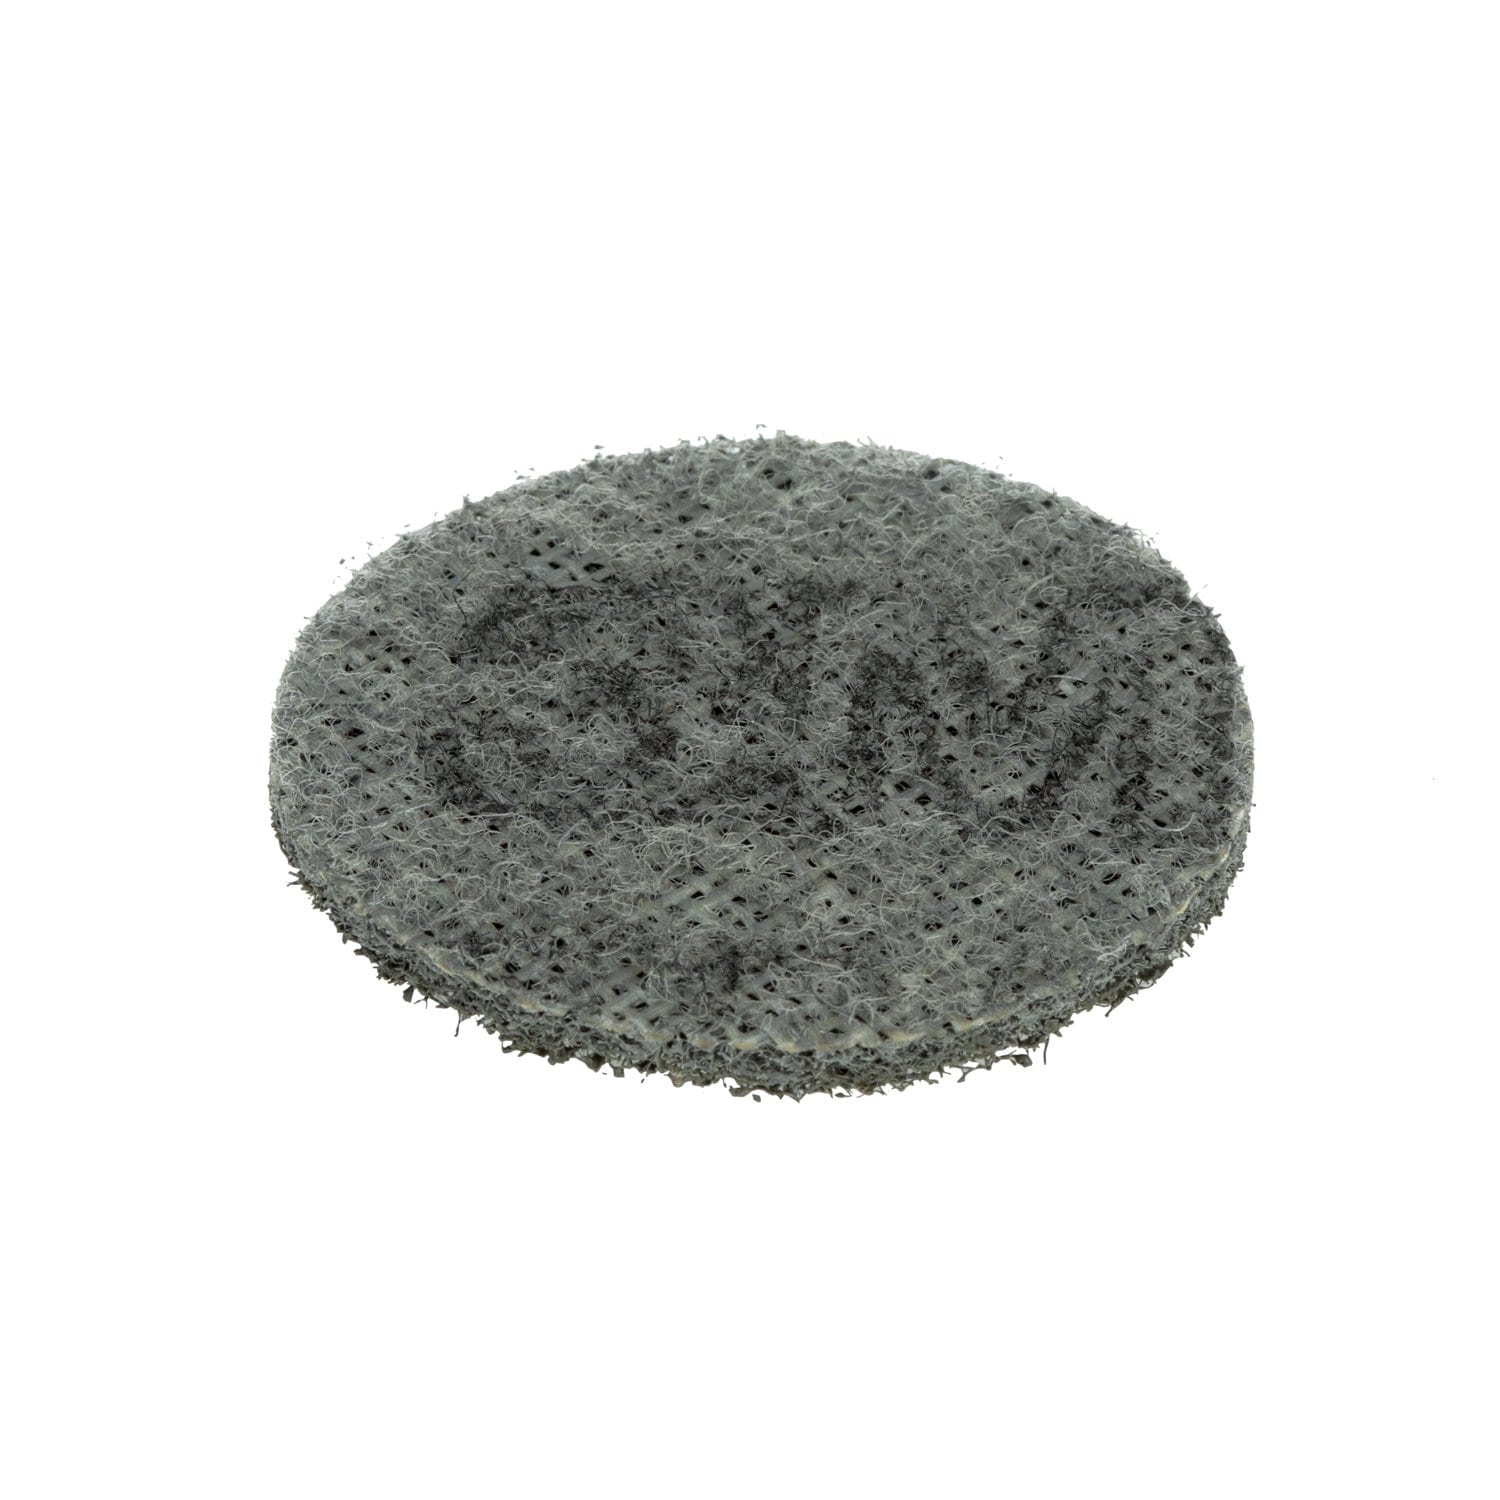 7100069814 - Scotch-Brite Roloc Surface Conditioning Disc, SC-DM, SiC Super Fine,
TSM, 2 in, 50/Carton, 200 ea/Case